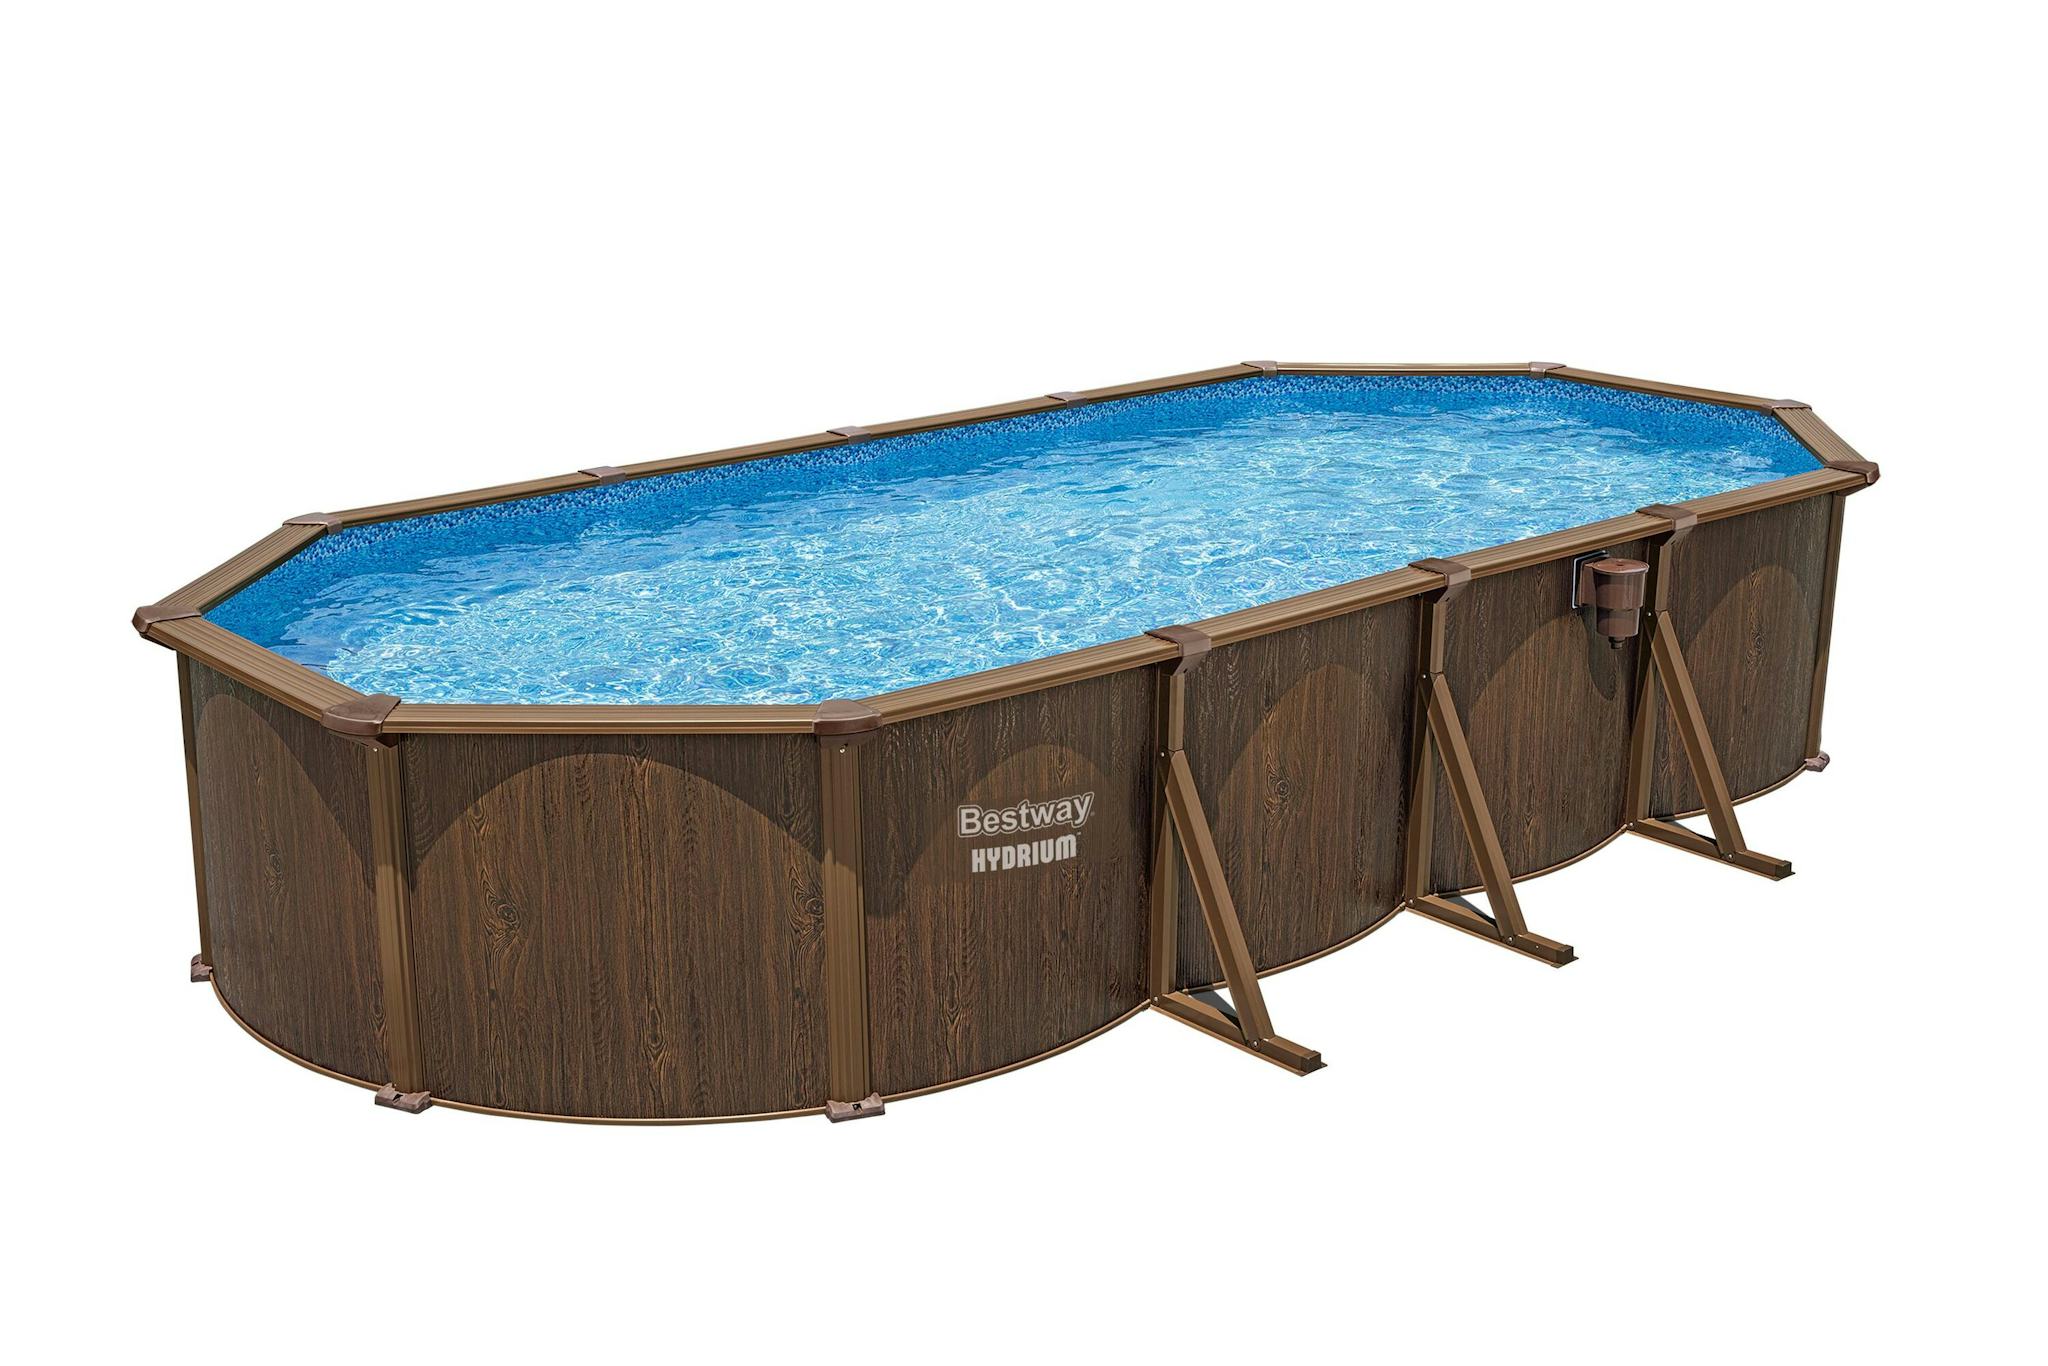 Piscine fuori terra Set piscina fuori terra ovale Hydrium da 732x366x132 cm effetto legno Bestway 2